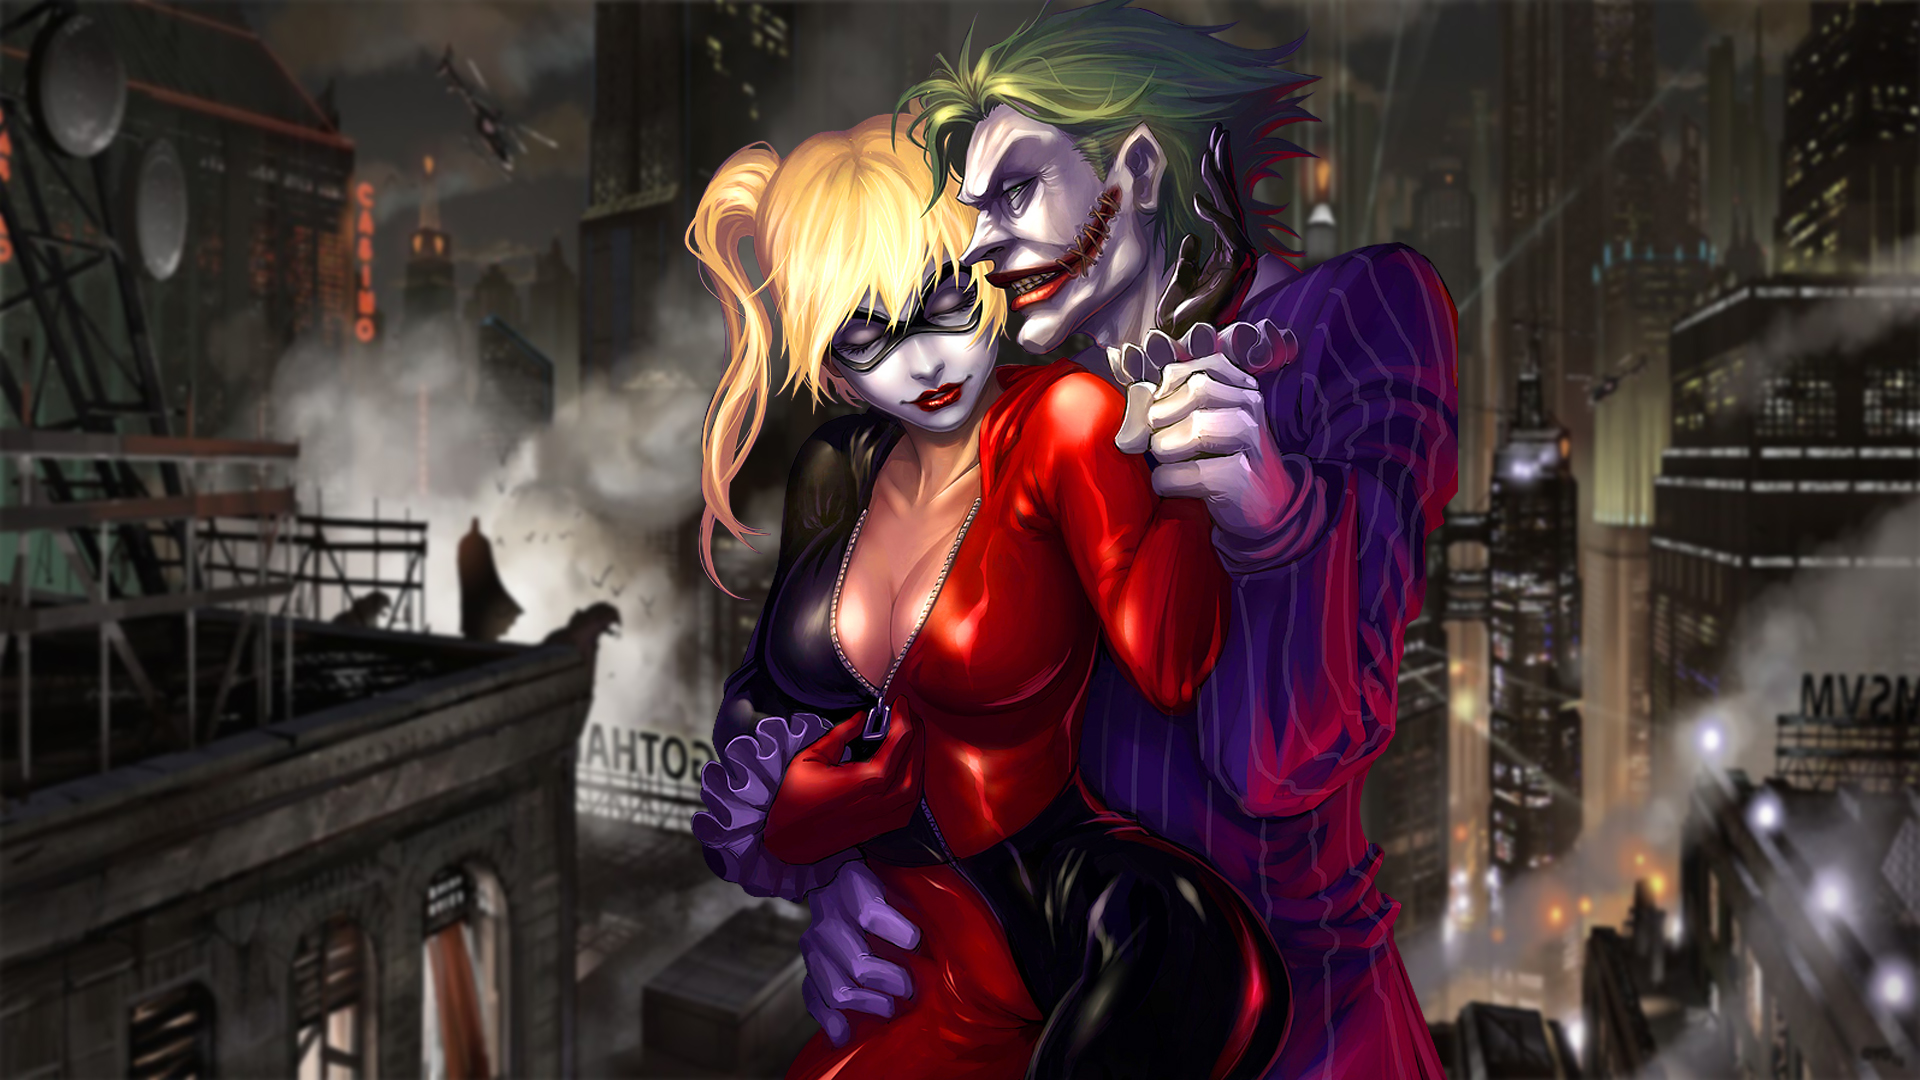 Wallpaper - Joker and Harley Quinn by RegorZero on DeviantArt